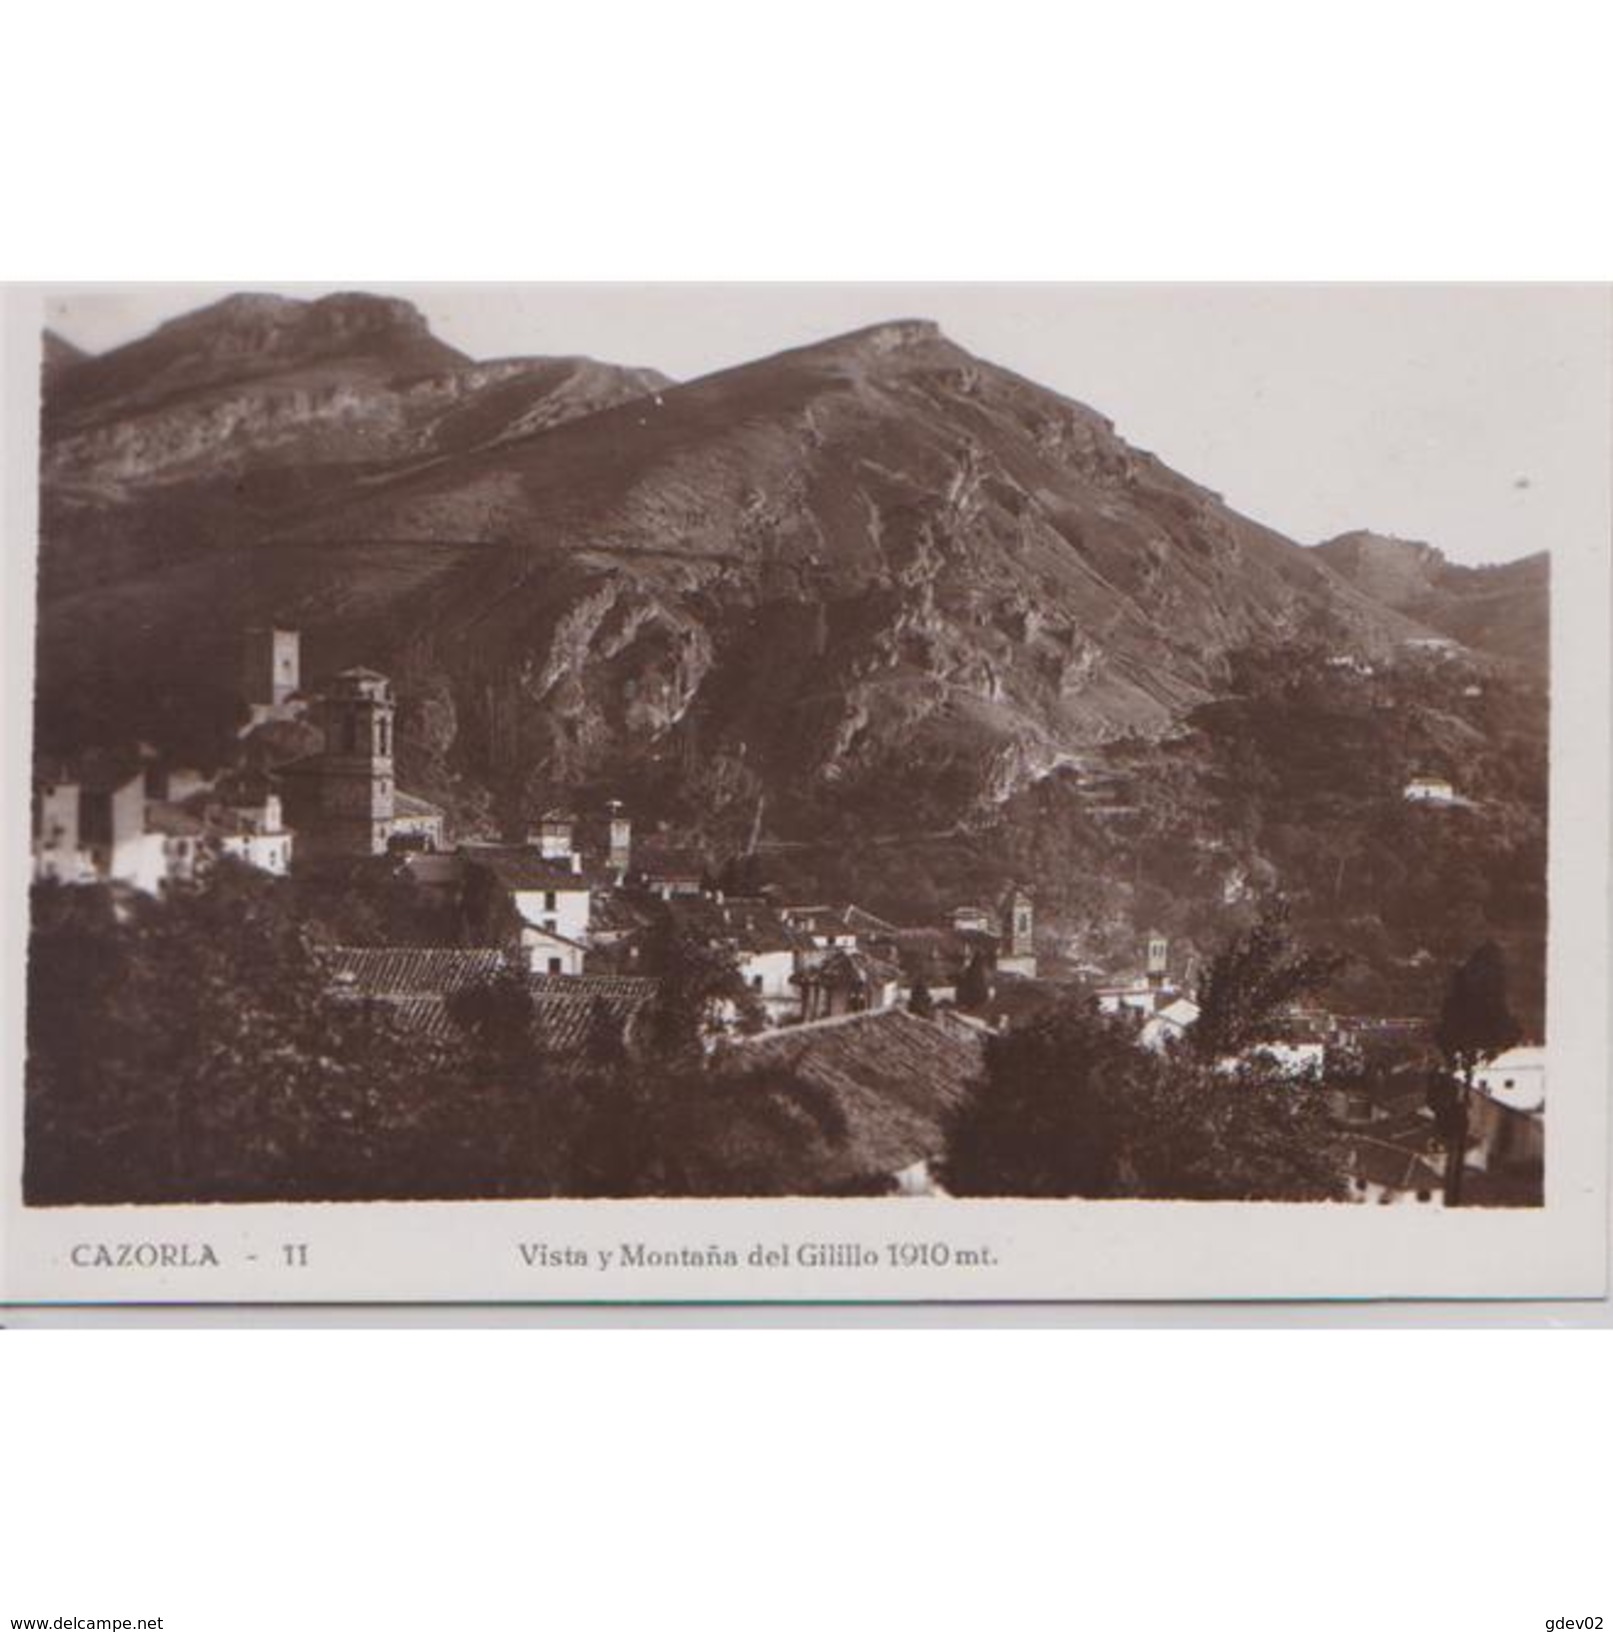 JNTP7764K-LFTD12669.Tarjeta Postal De JAEN.Edificios,arboles,montaña,en La SIERRA DE CAZORLA.pico Del Gilillo En CAZORLA - Jaén